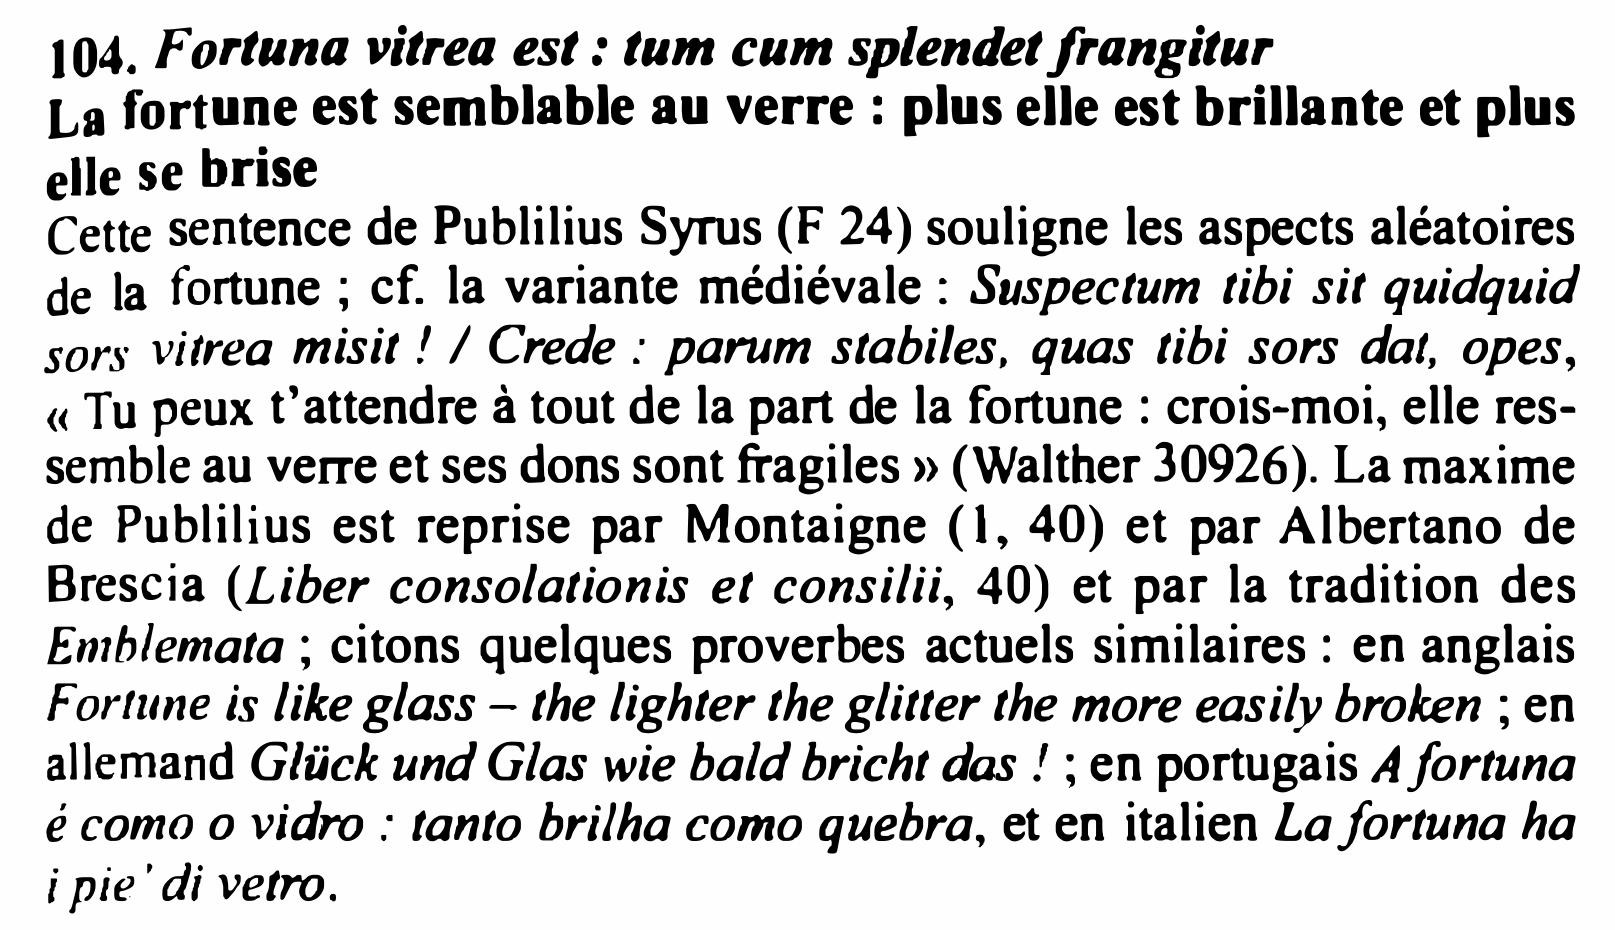 Prévisualisation du document 104. Fortuna vitrea est: tum cum splendetfrangitur

La fortune est semblable au verre : plus elle est brillante et plus...